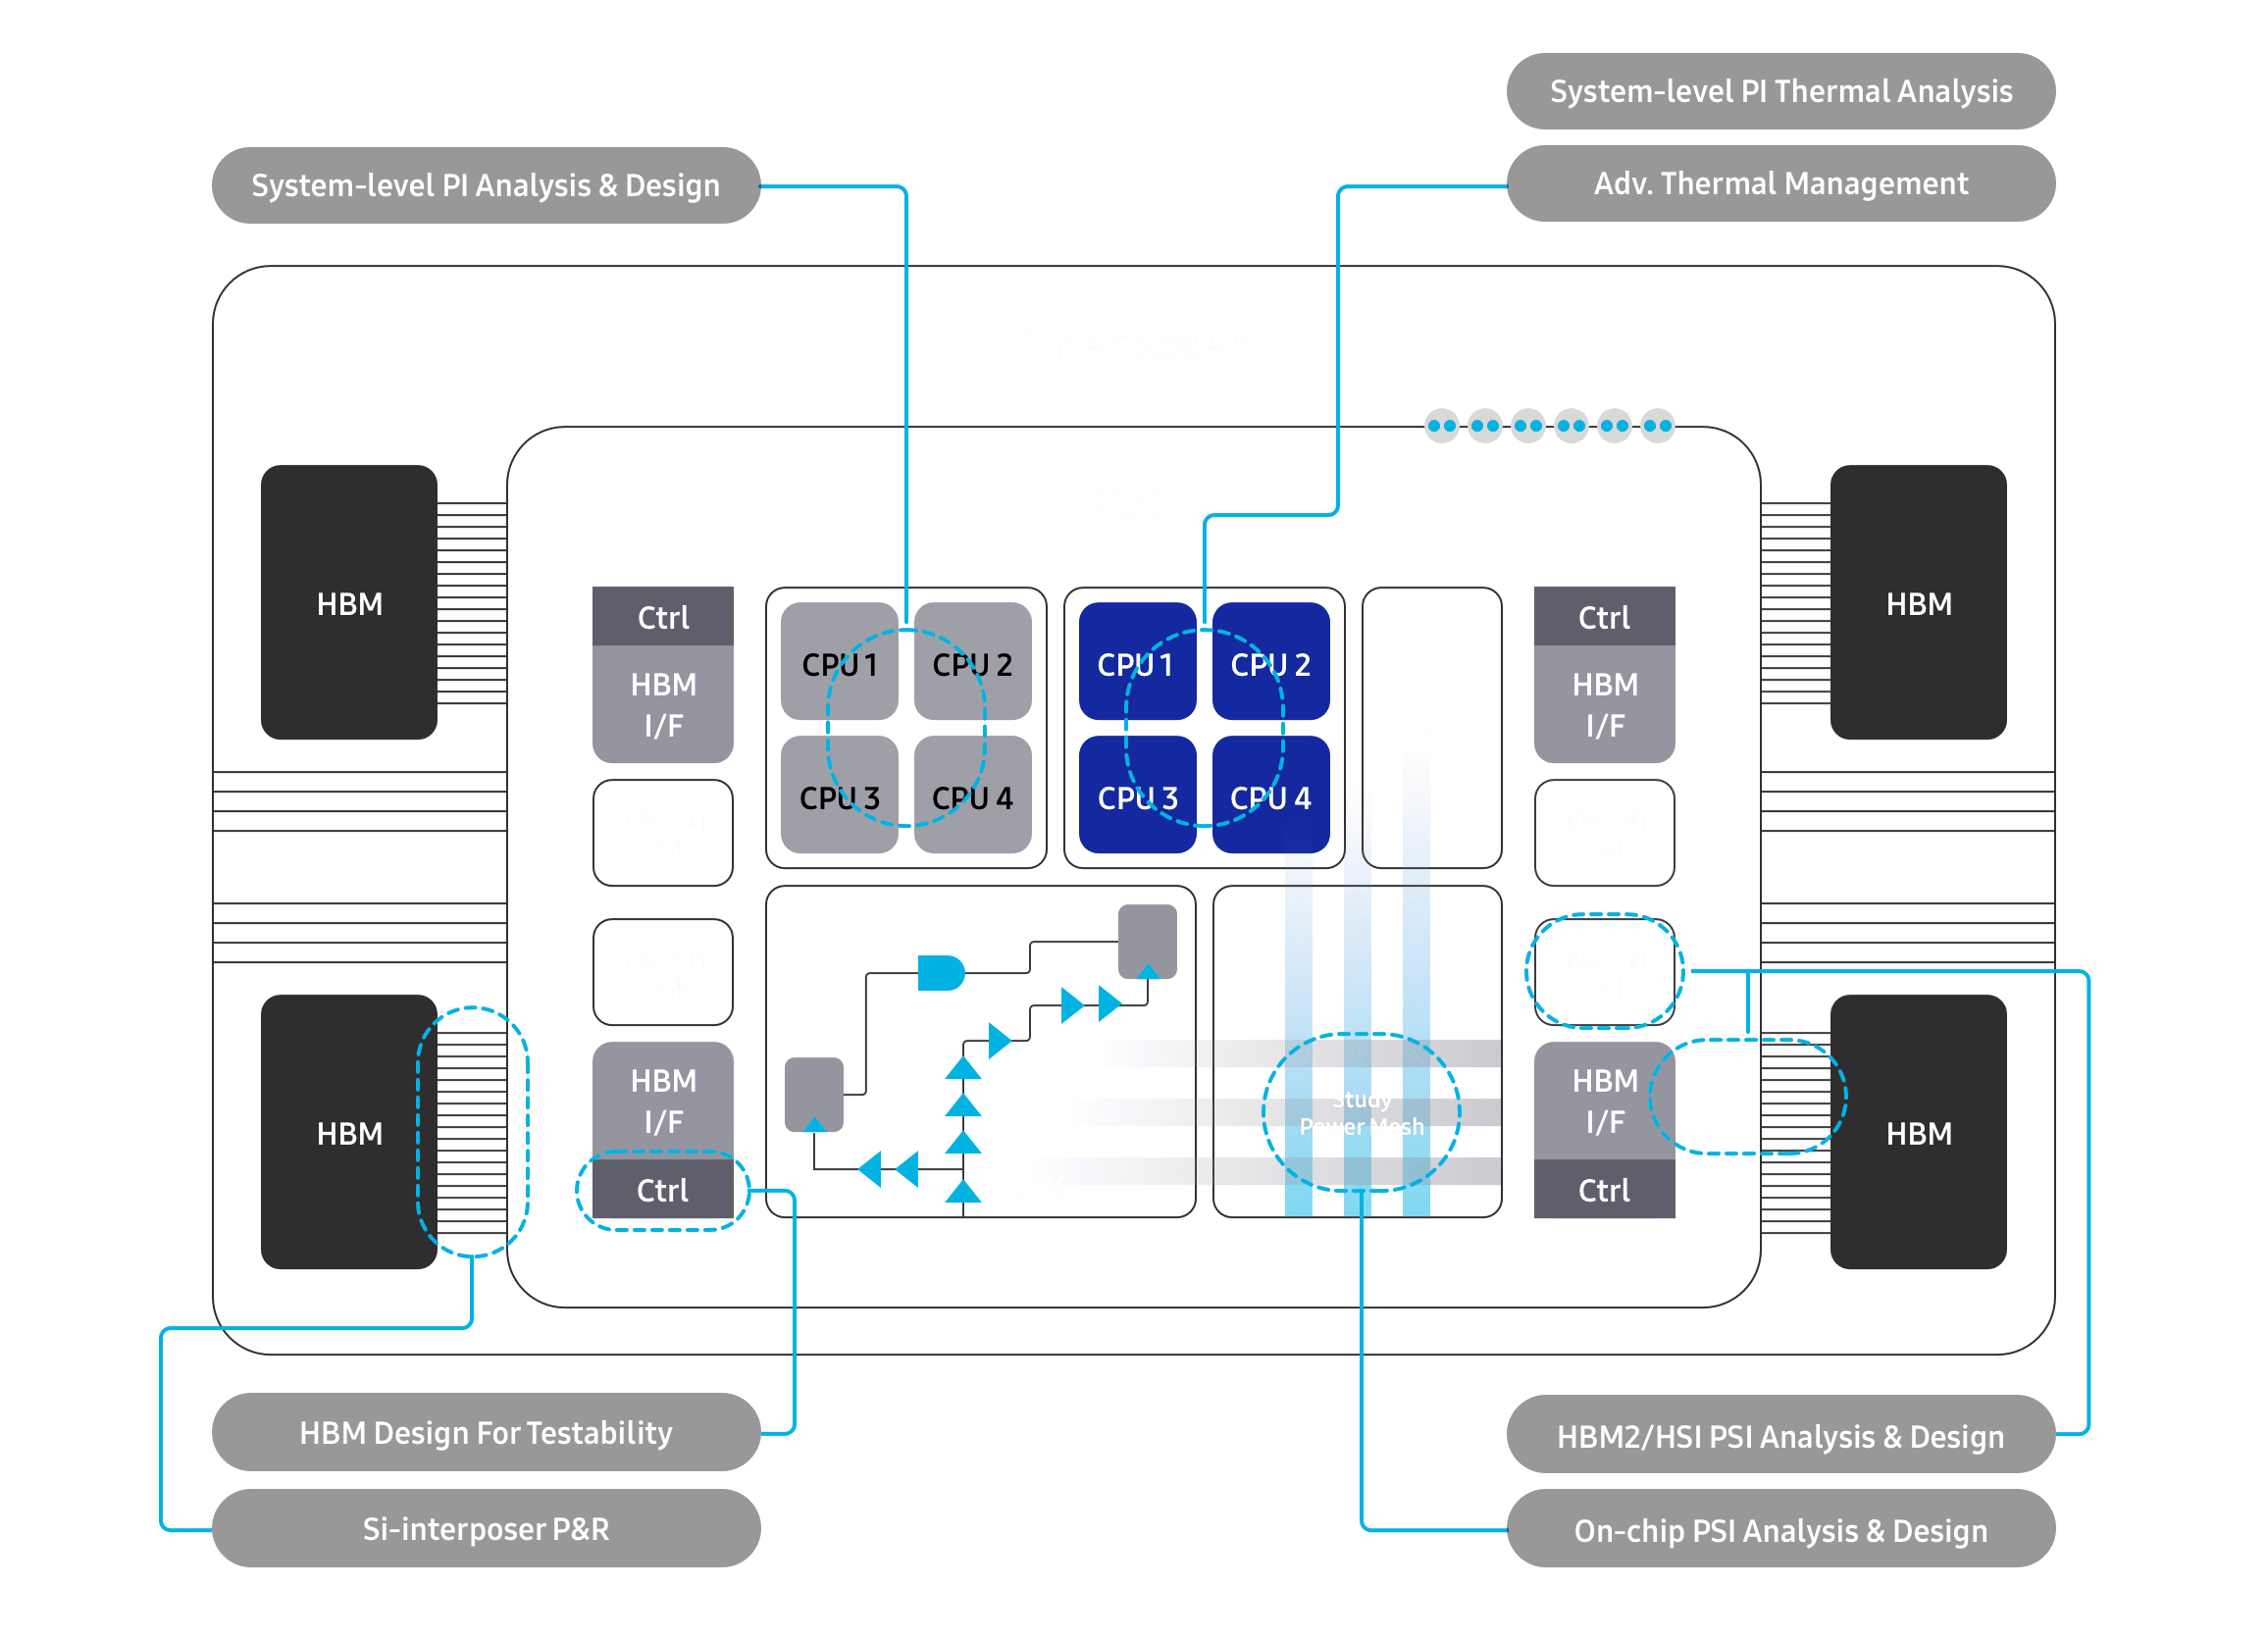 Interposer 집합이 4개의 HBM와 SoC로 구성되어 있으며, SoC 집합안에 4개의 C'trol, 4개의 HBM I/F, 4개의 Interchip Link, 2개의 CPU1, 2개의 CPU2, 2개의 CPU3, 2개의 CPU4, PERI, CLK, Study Power Mesh 로 구성되어 있는 인포그래픽을 System-level PI Analysis & Design, System-level PI Thermal Analysis, Adv. Thermal Management, HBM2 Design For Testability, Si-interposer P&R, HBM2/HIS PSI Analysis & Design, On-chip PSI Analysis & Design 항목으로 설명하는 텍스트